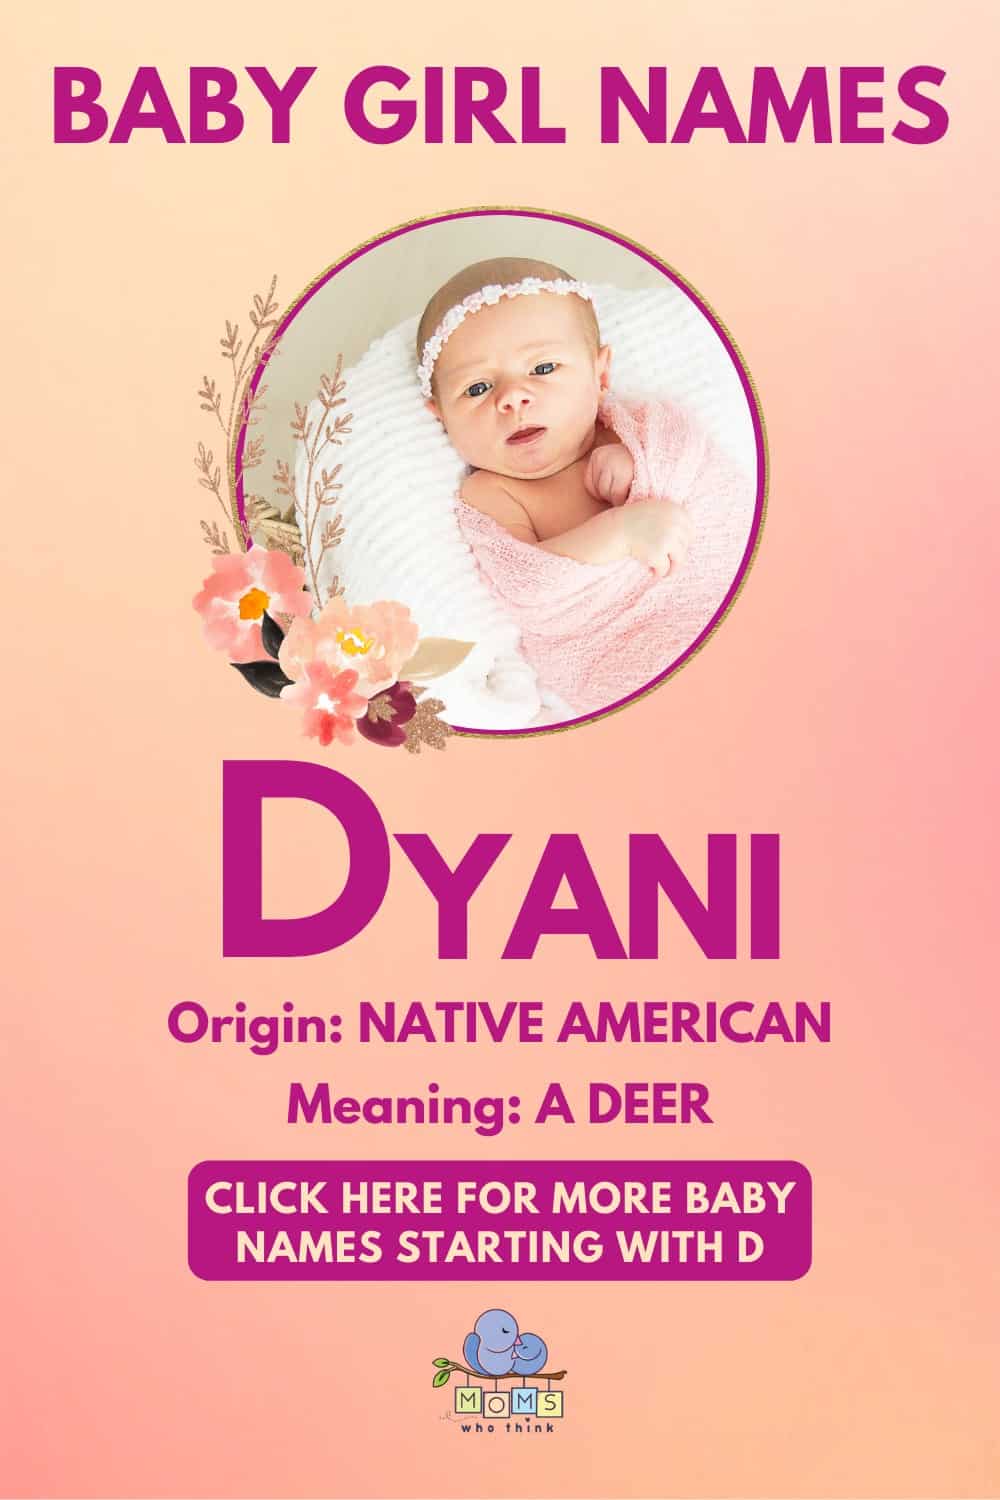 Baby girl name meanings - Dyani